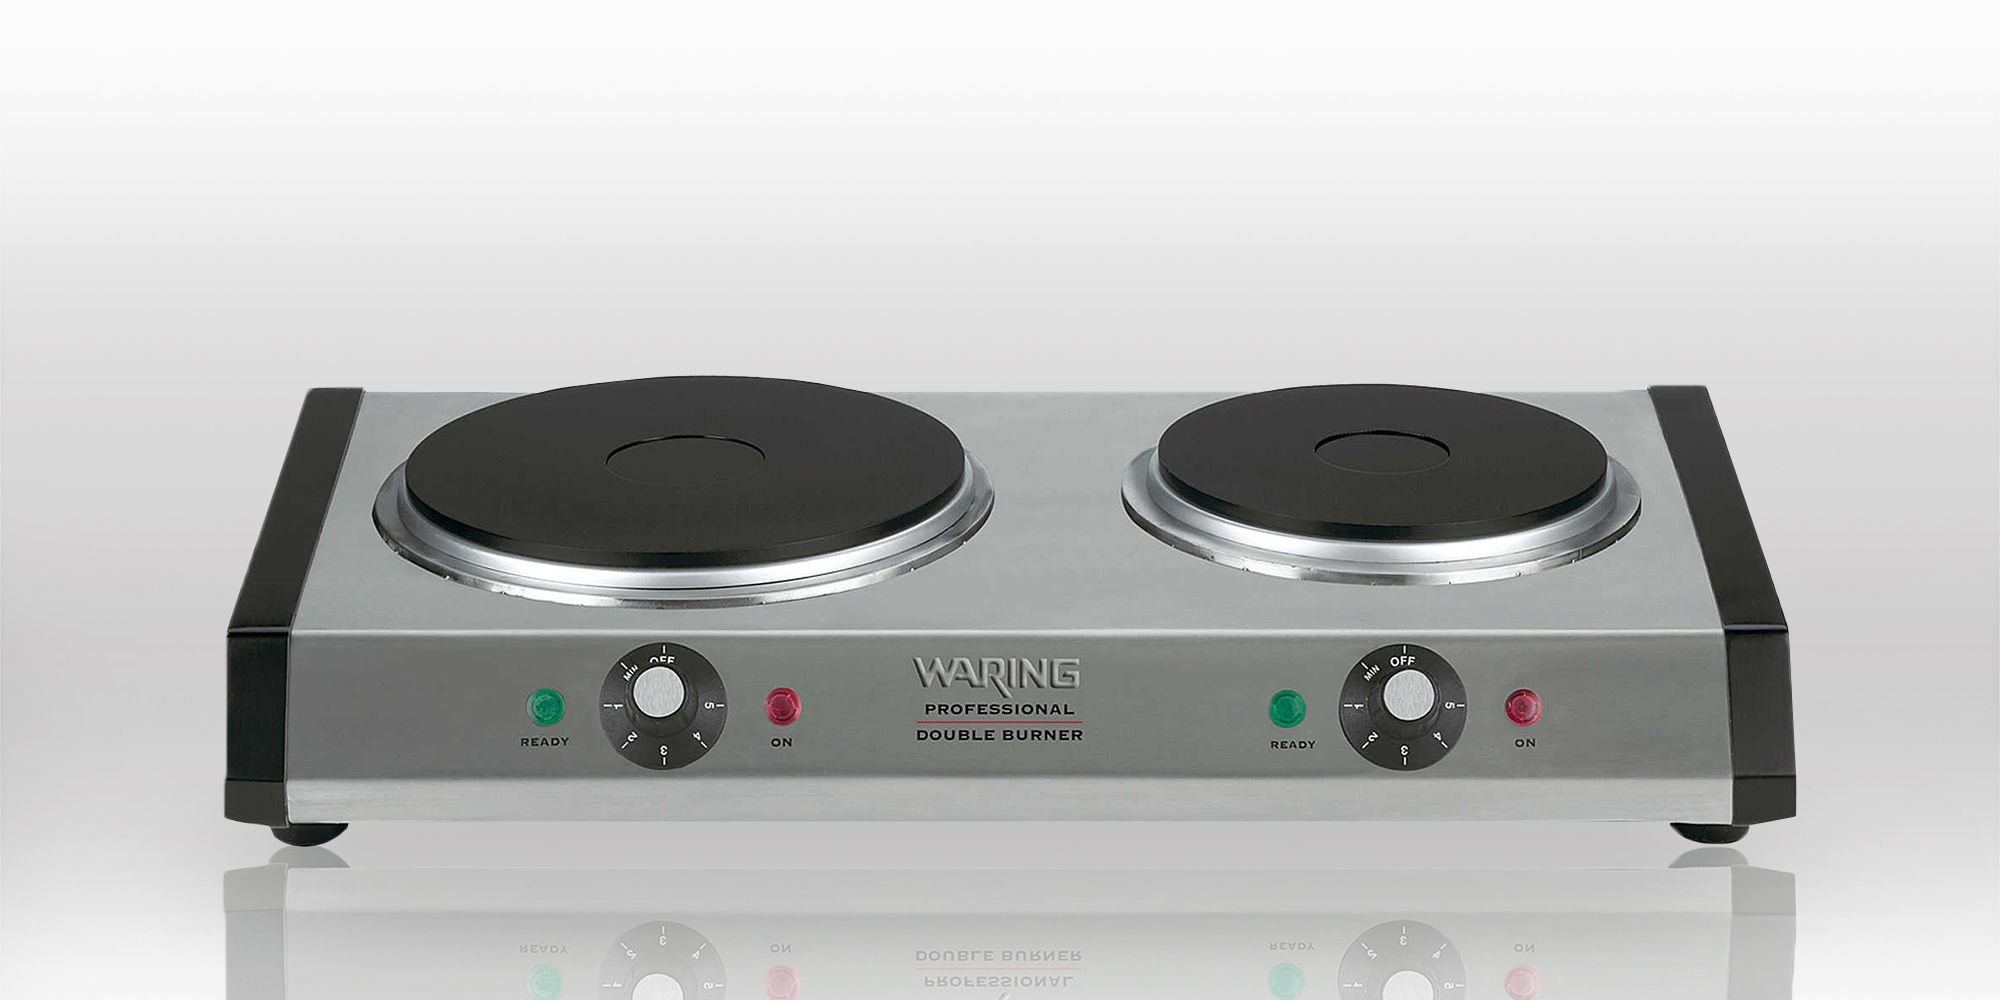 1453907974-portable-stove-burner.jpg